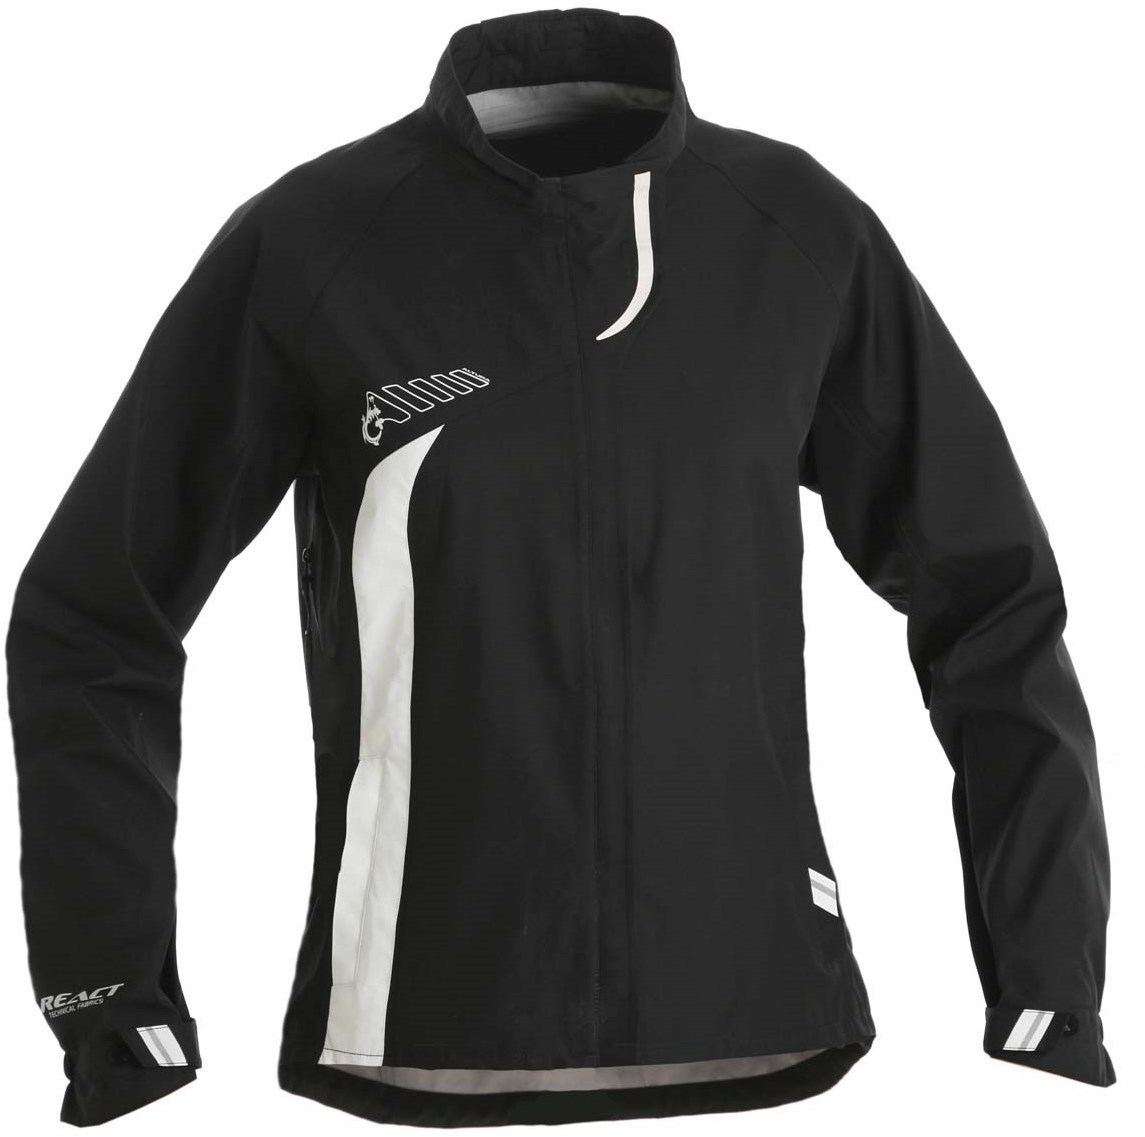 Altura Sirius Plus Womens Waterproof Cycling Jacket 2013 product image